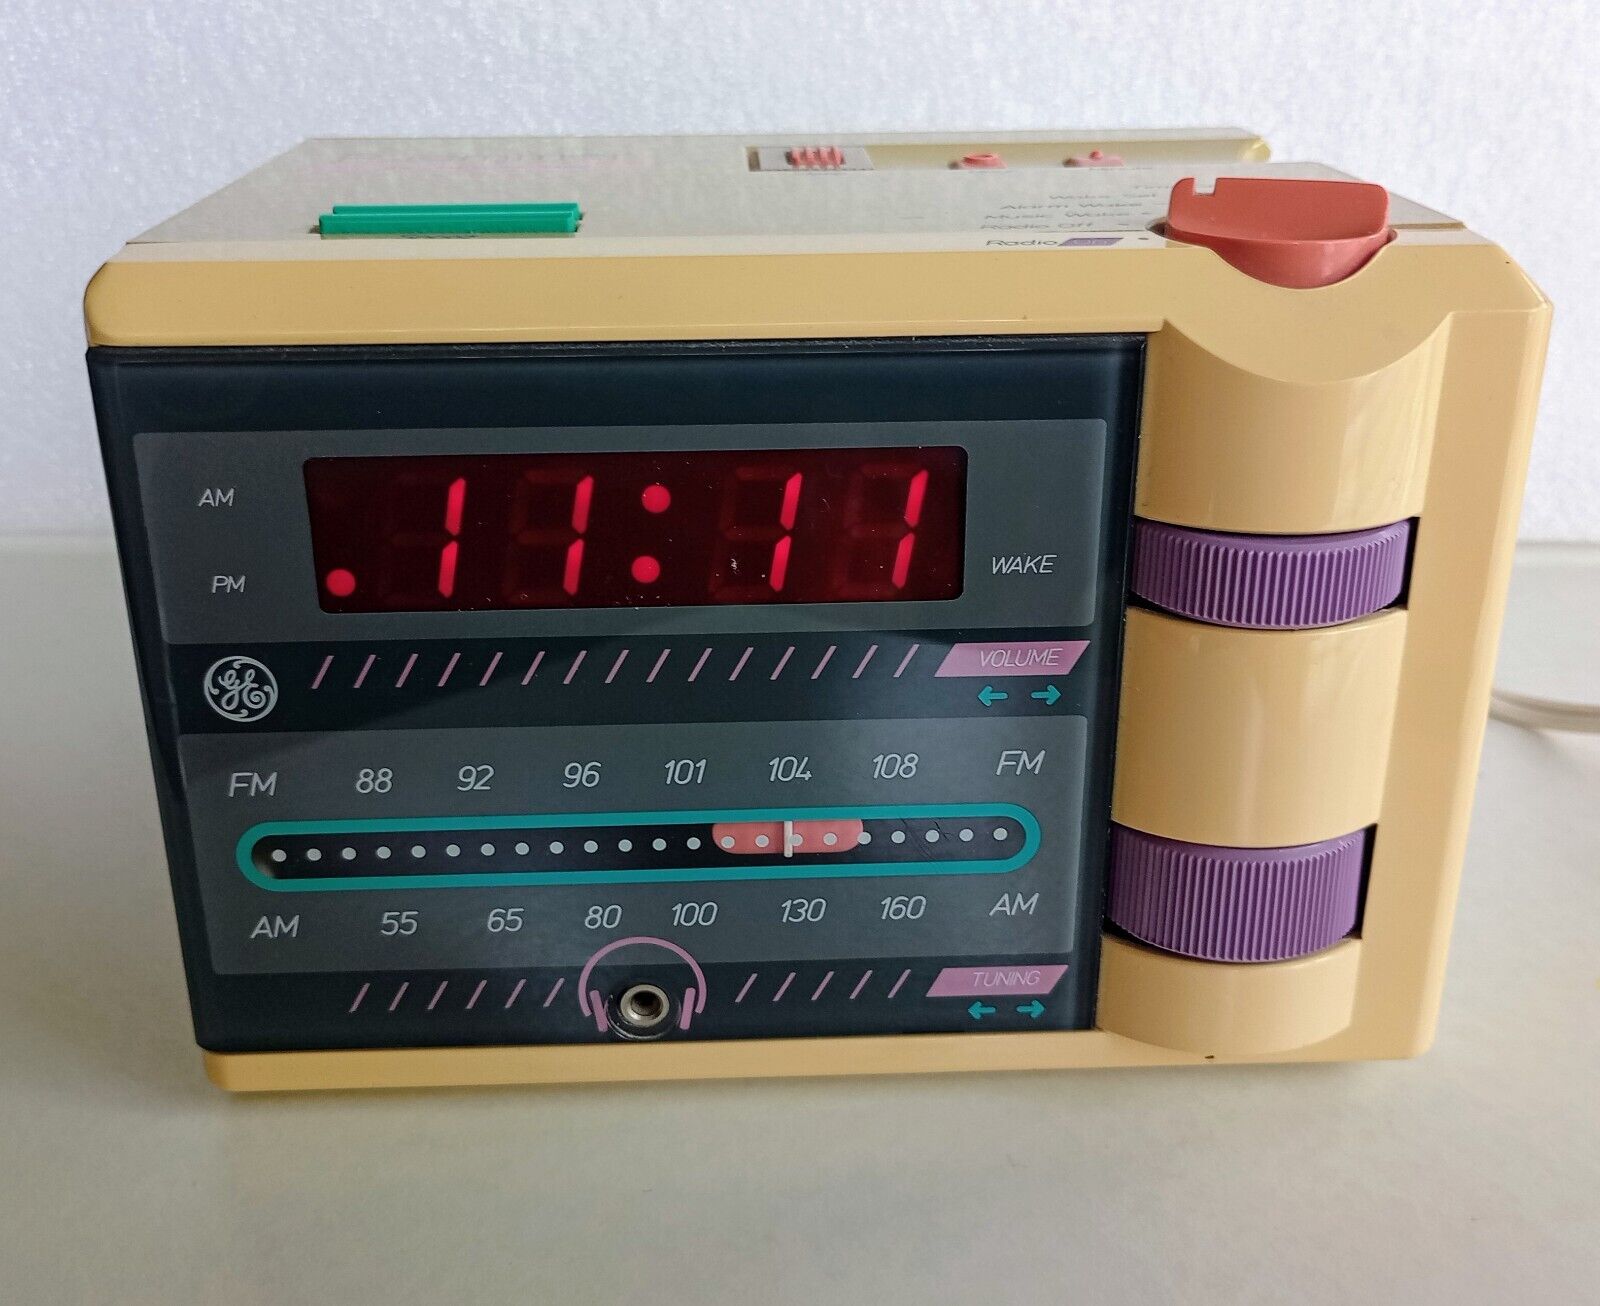 Vintage P'Jammer Alarm Clock Radio GE 7-4607WHB Retro 1980s - Works Great 